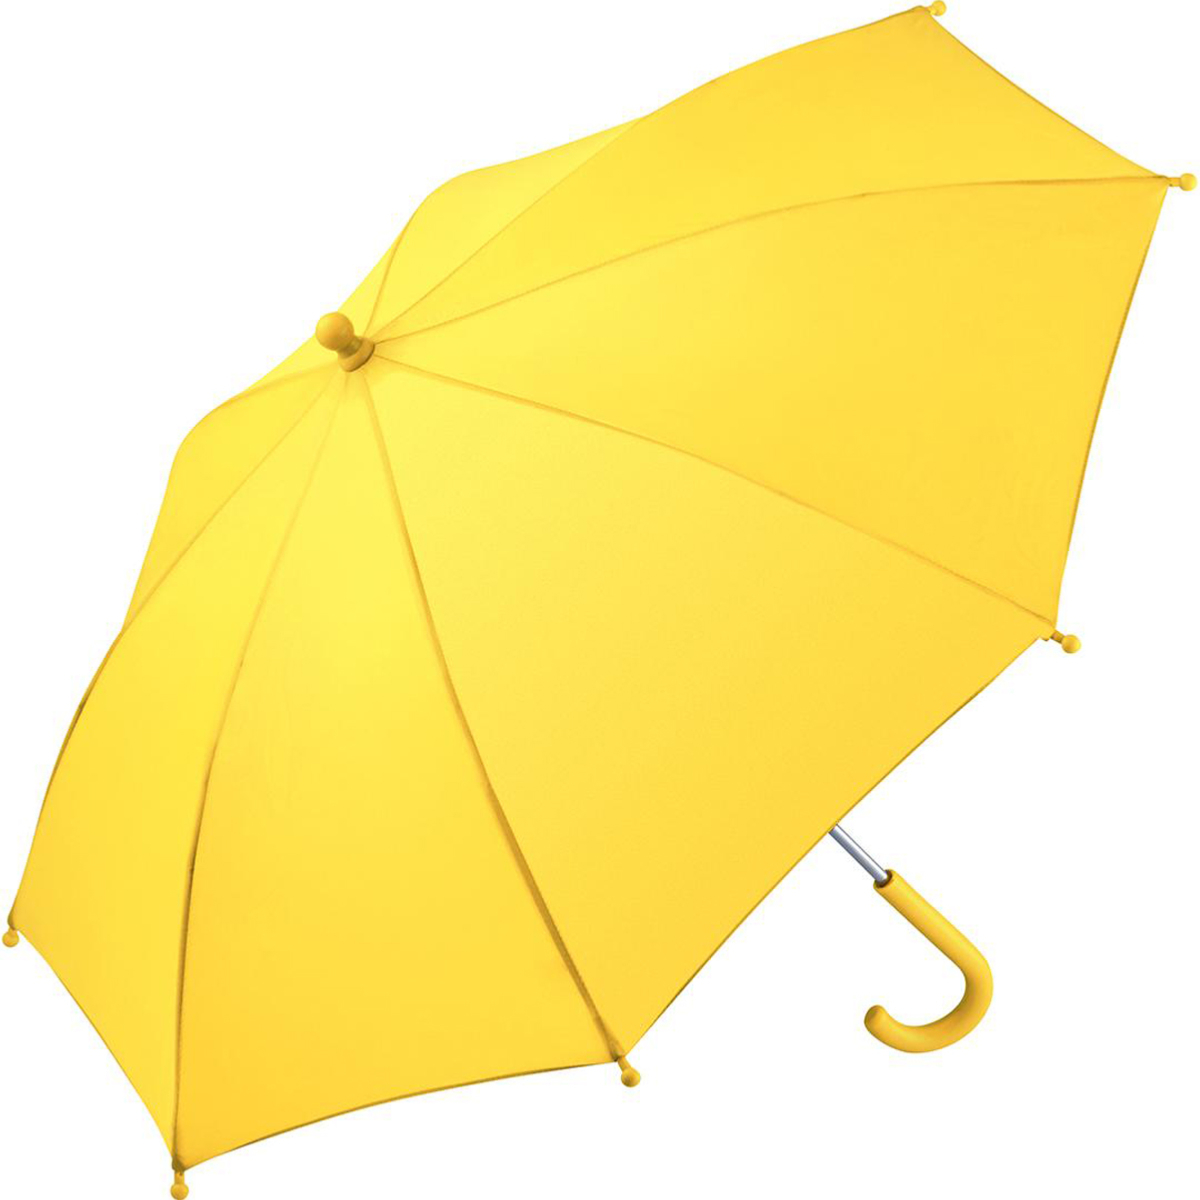 Performance Range Children's Walking Length Umbrella by Fare - Yellow